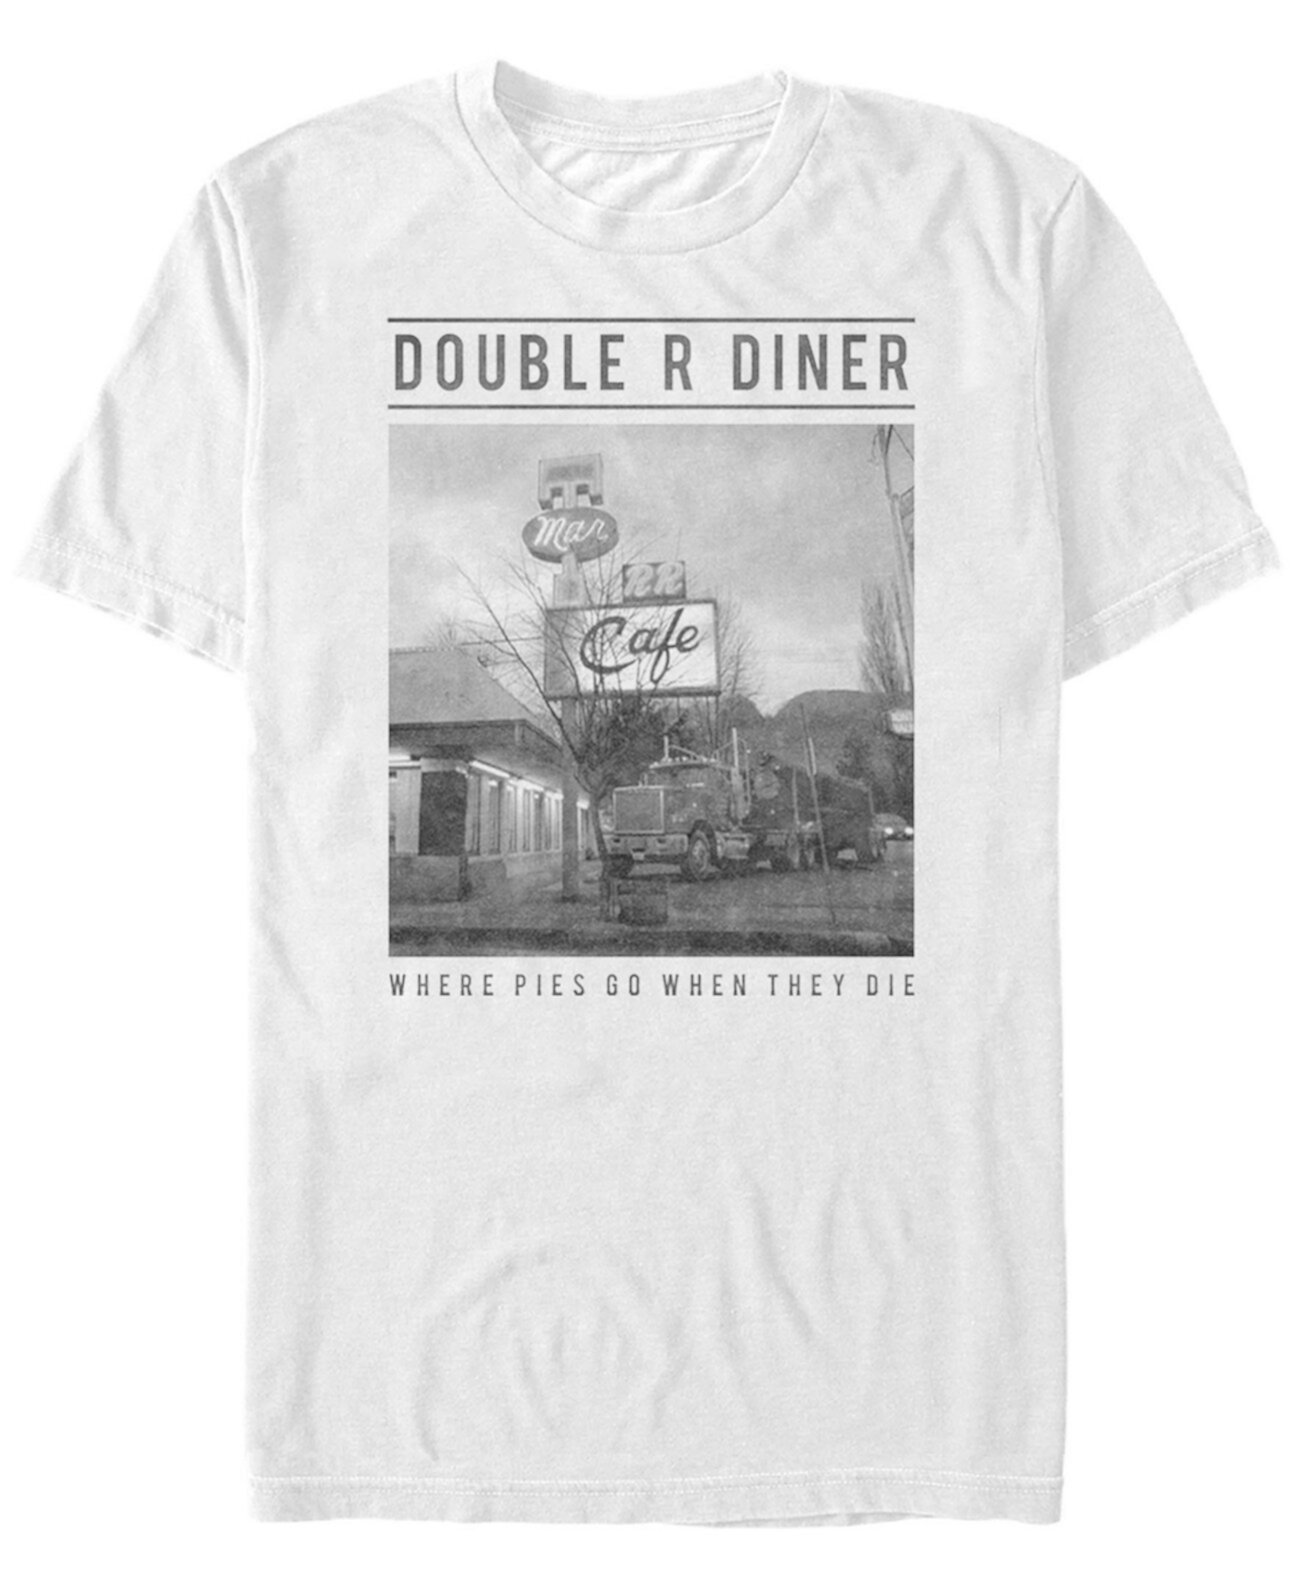 Мужская футболка Double R Diner с коротким рукавом FIFTH SUN